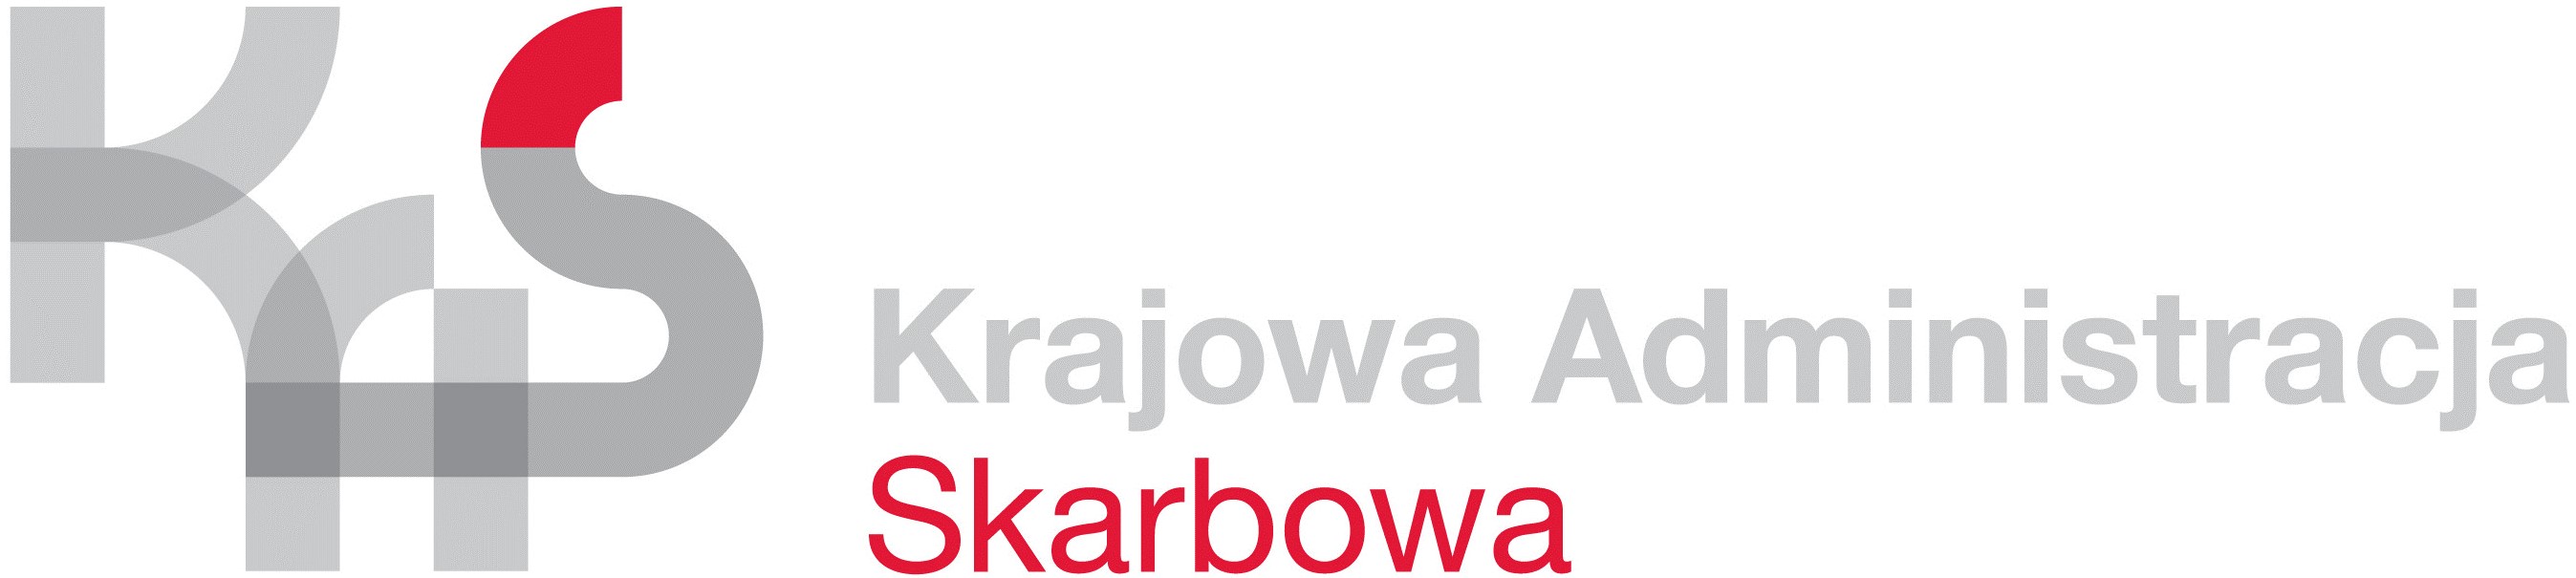 Logo Krajowej Administracji Skarbowej, w skrócie KAS.